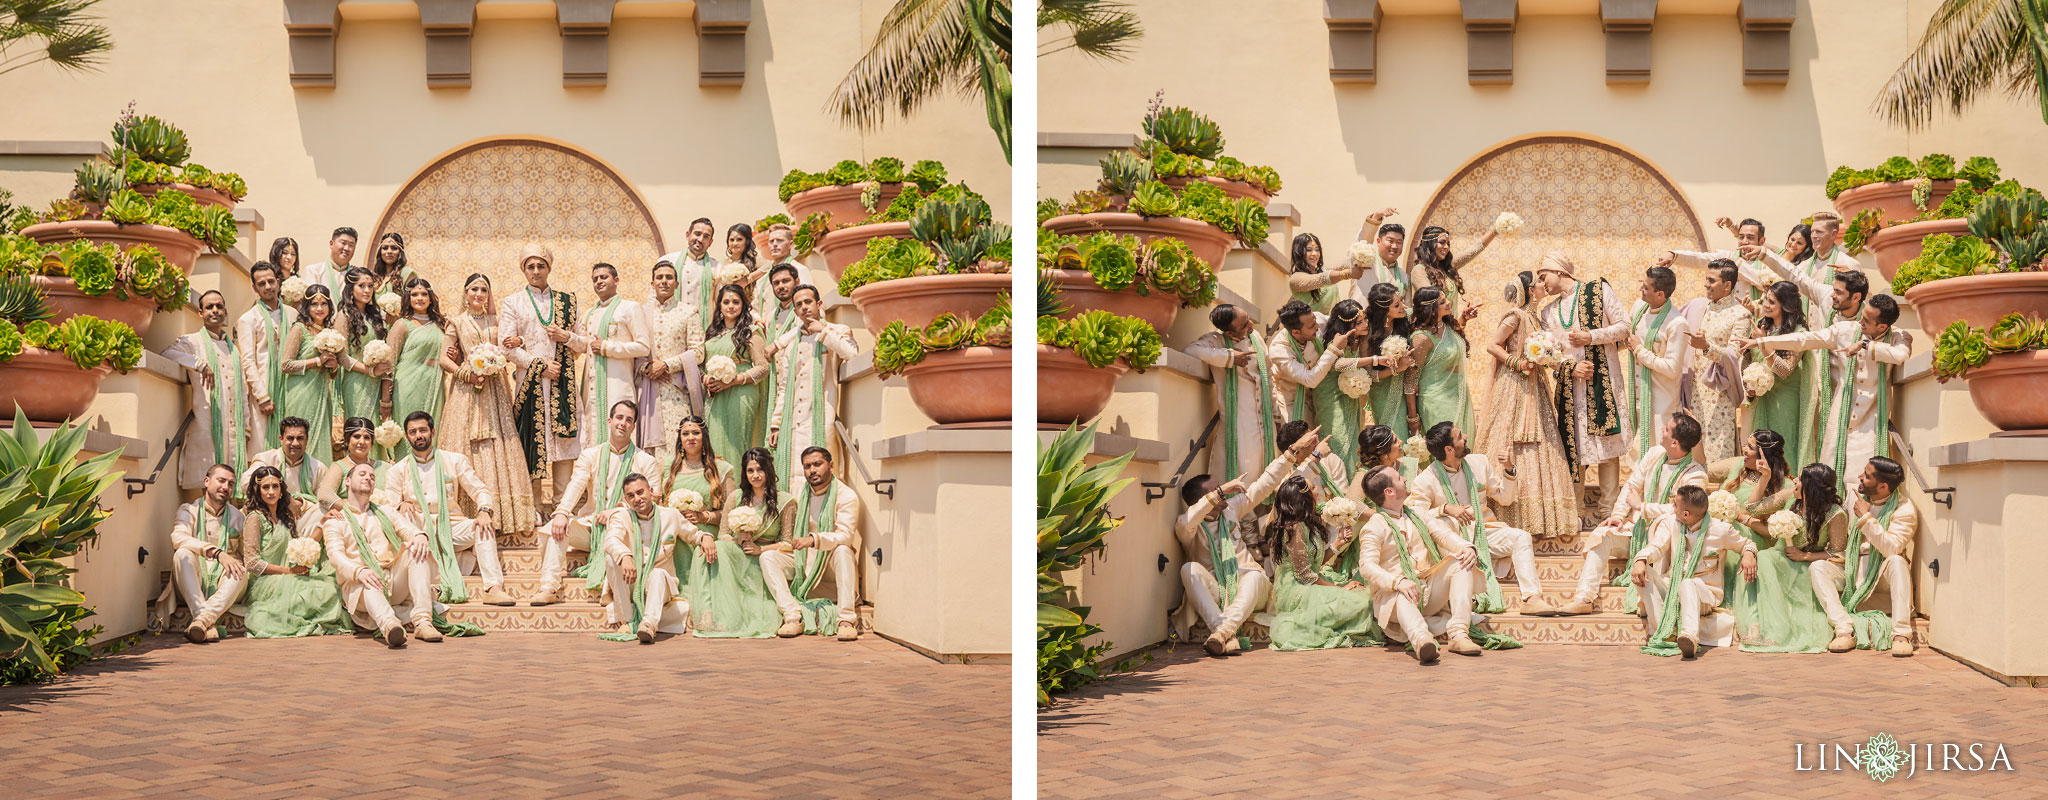 023 terranea resort palos verdes indian bridal party wedding photography